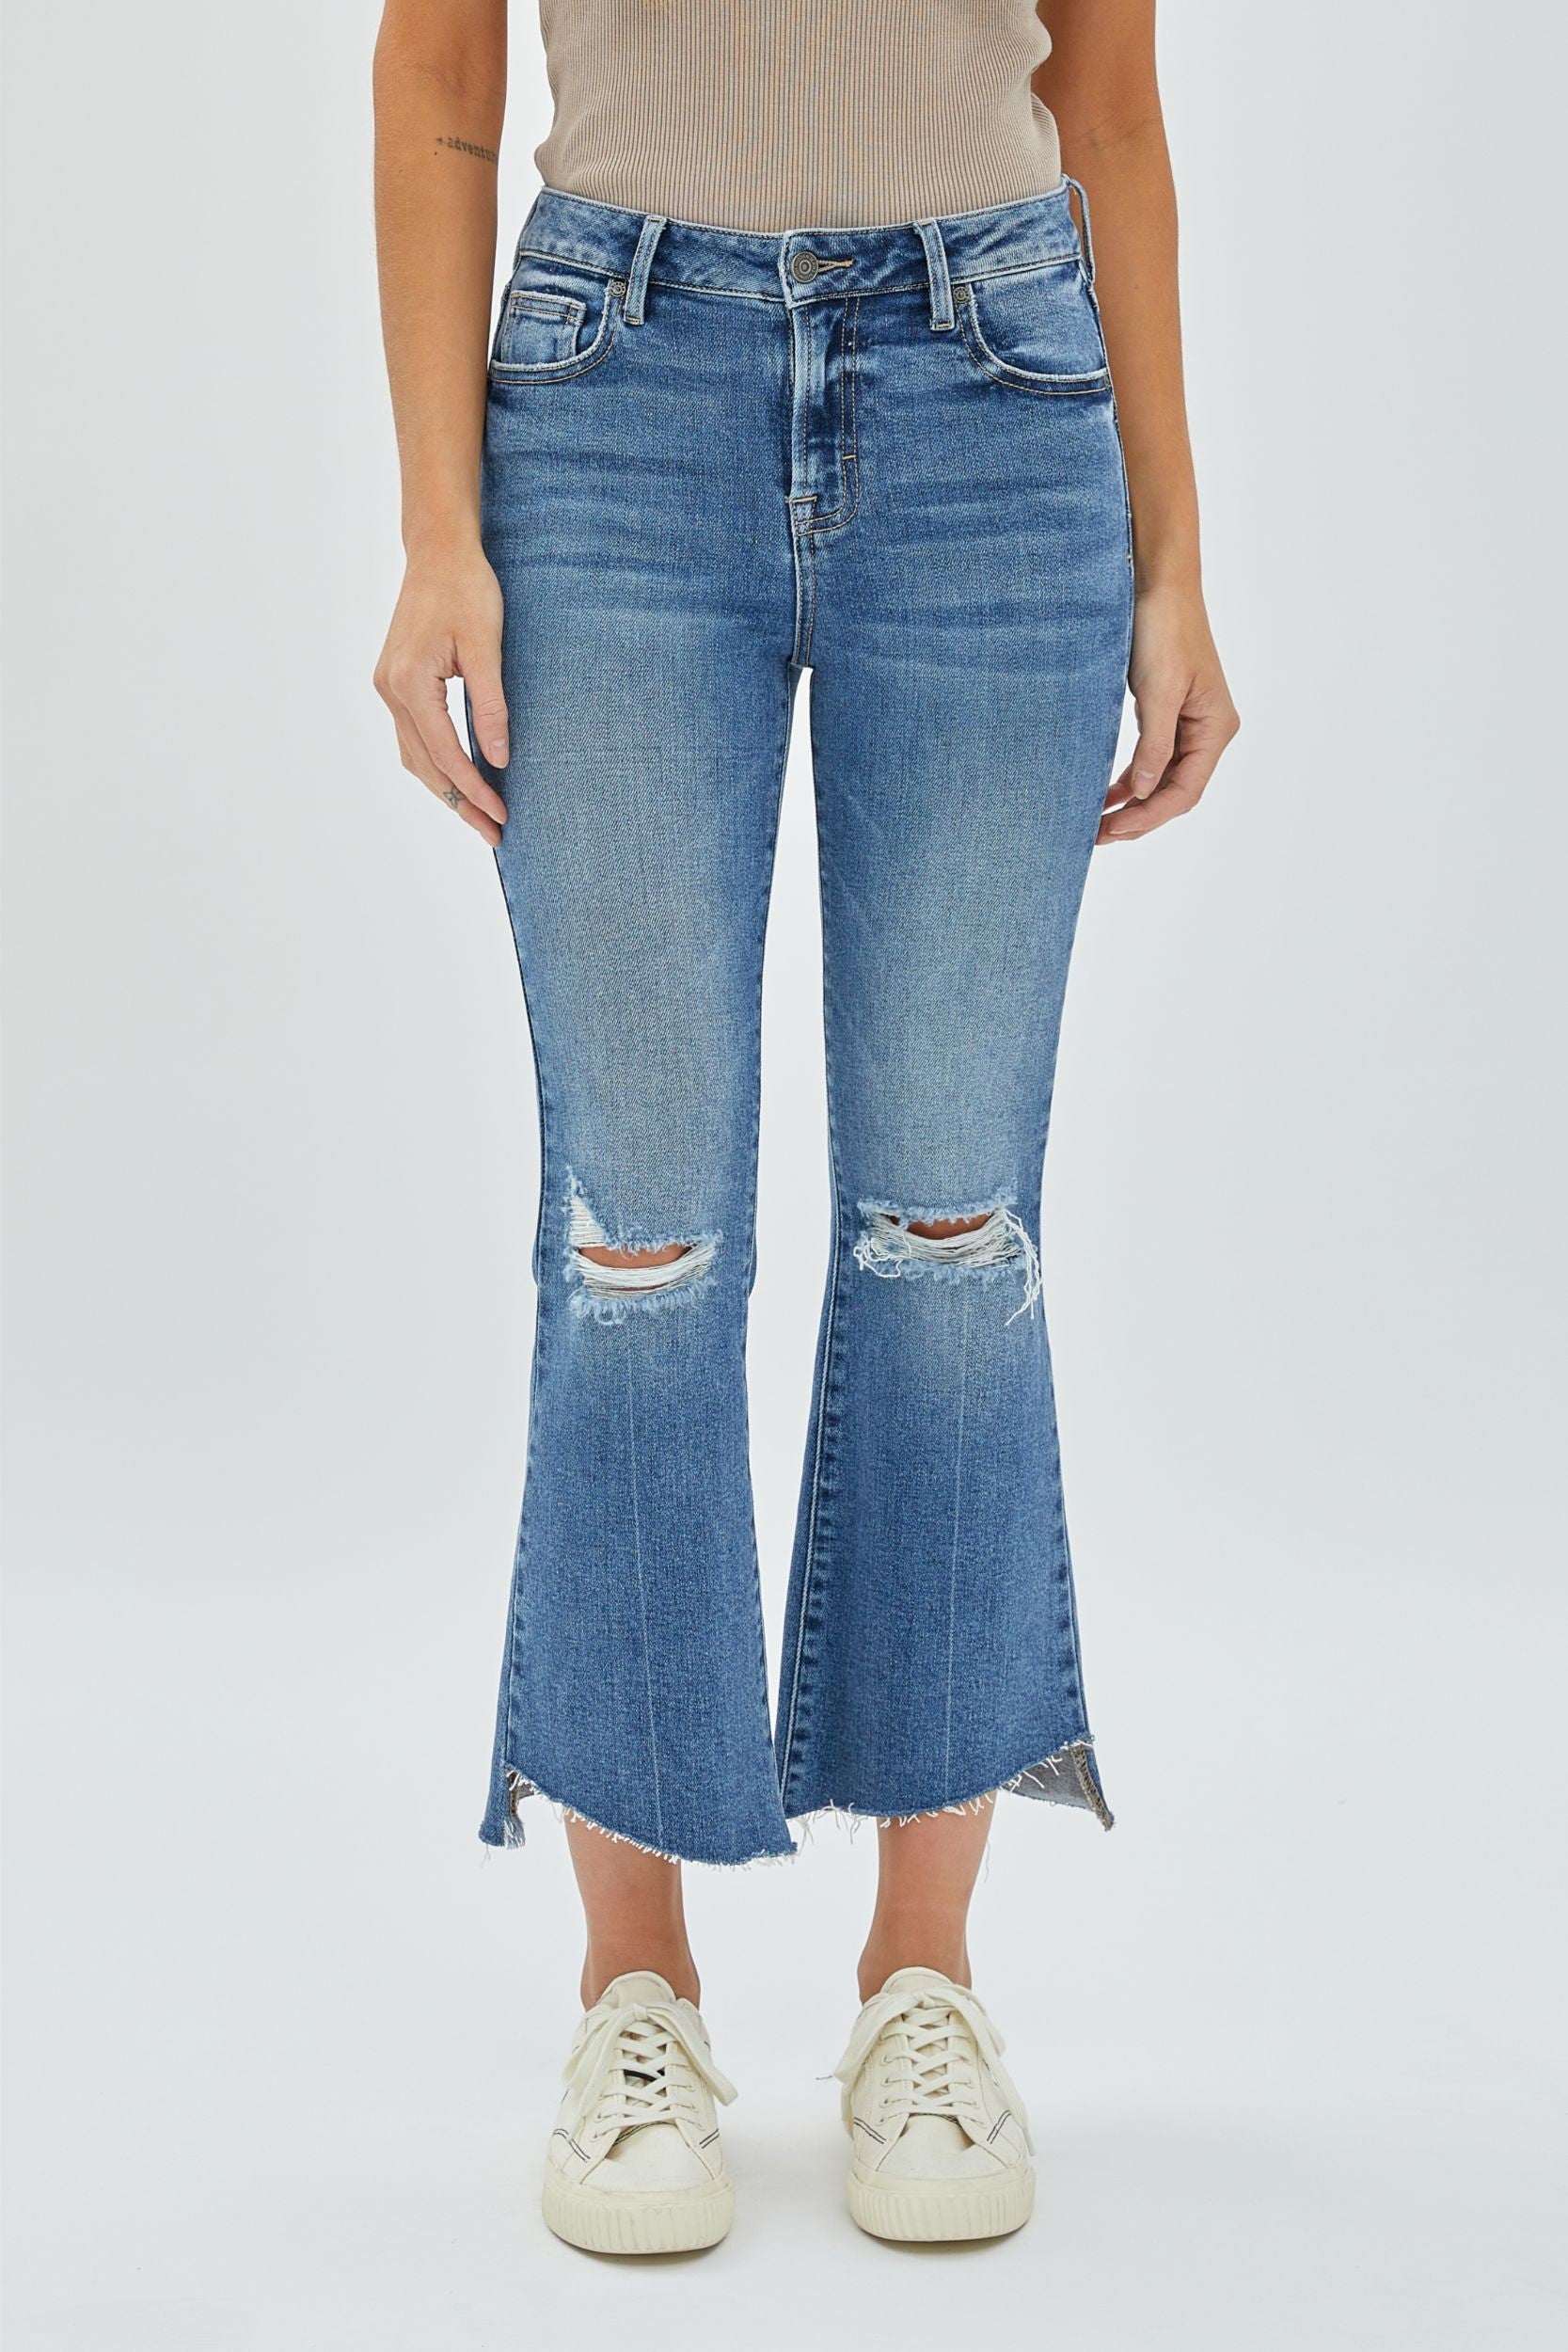 Syiwidii Vintage High Waisted Denim Flare High Waisted Flare Jeans